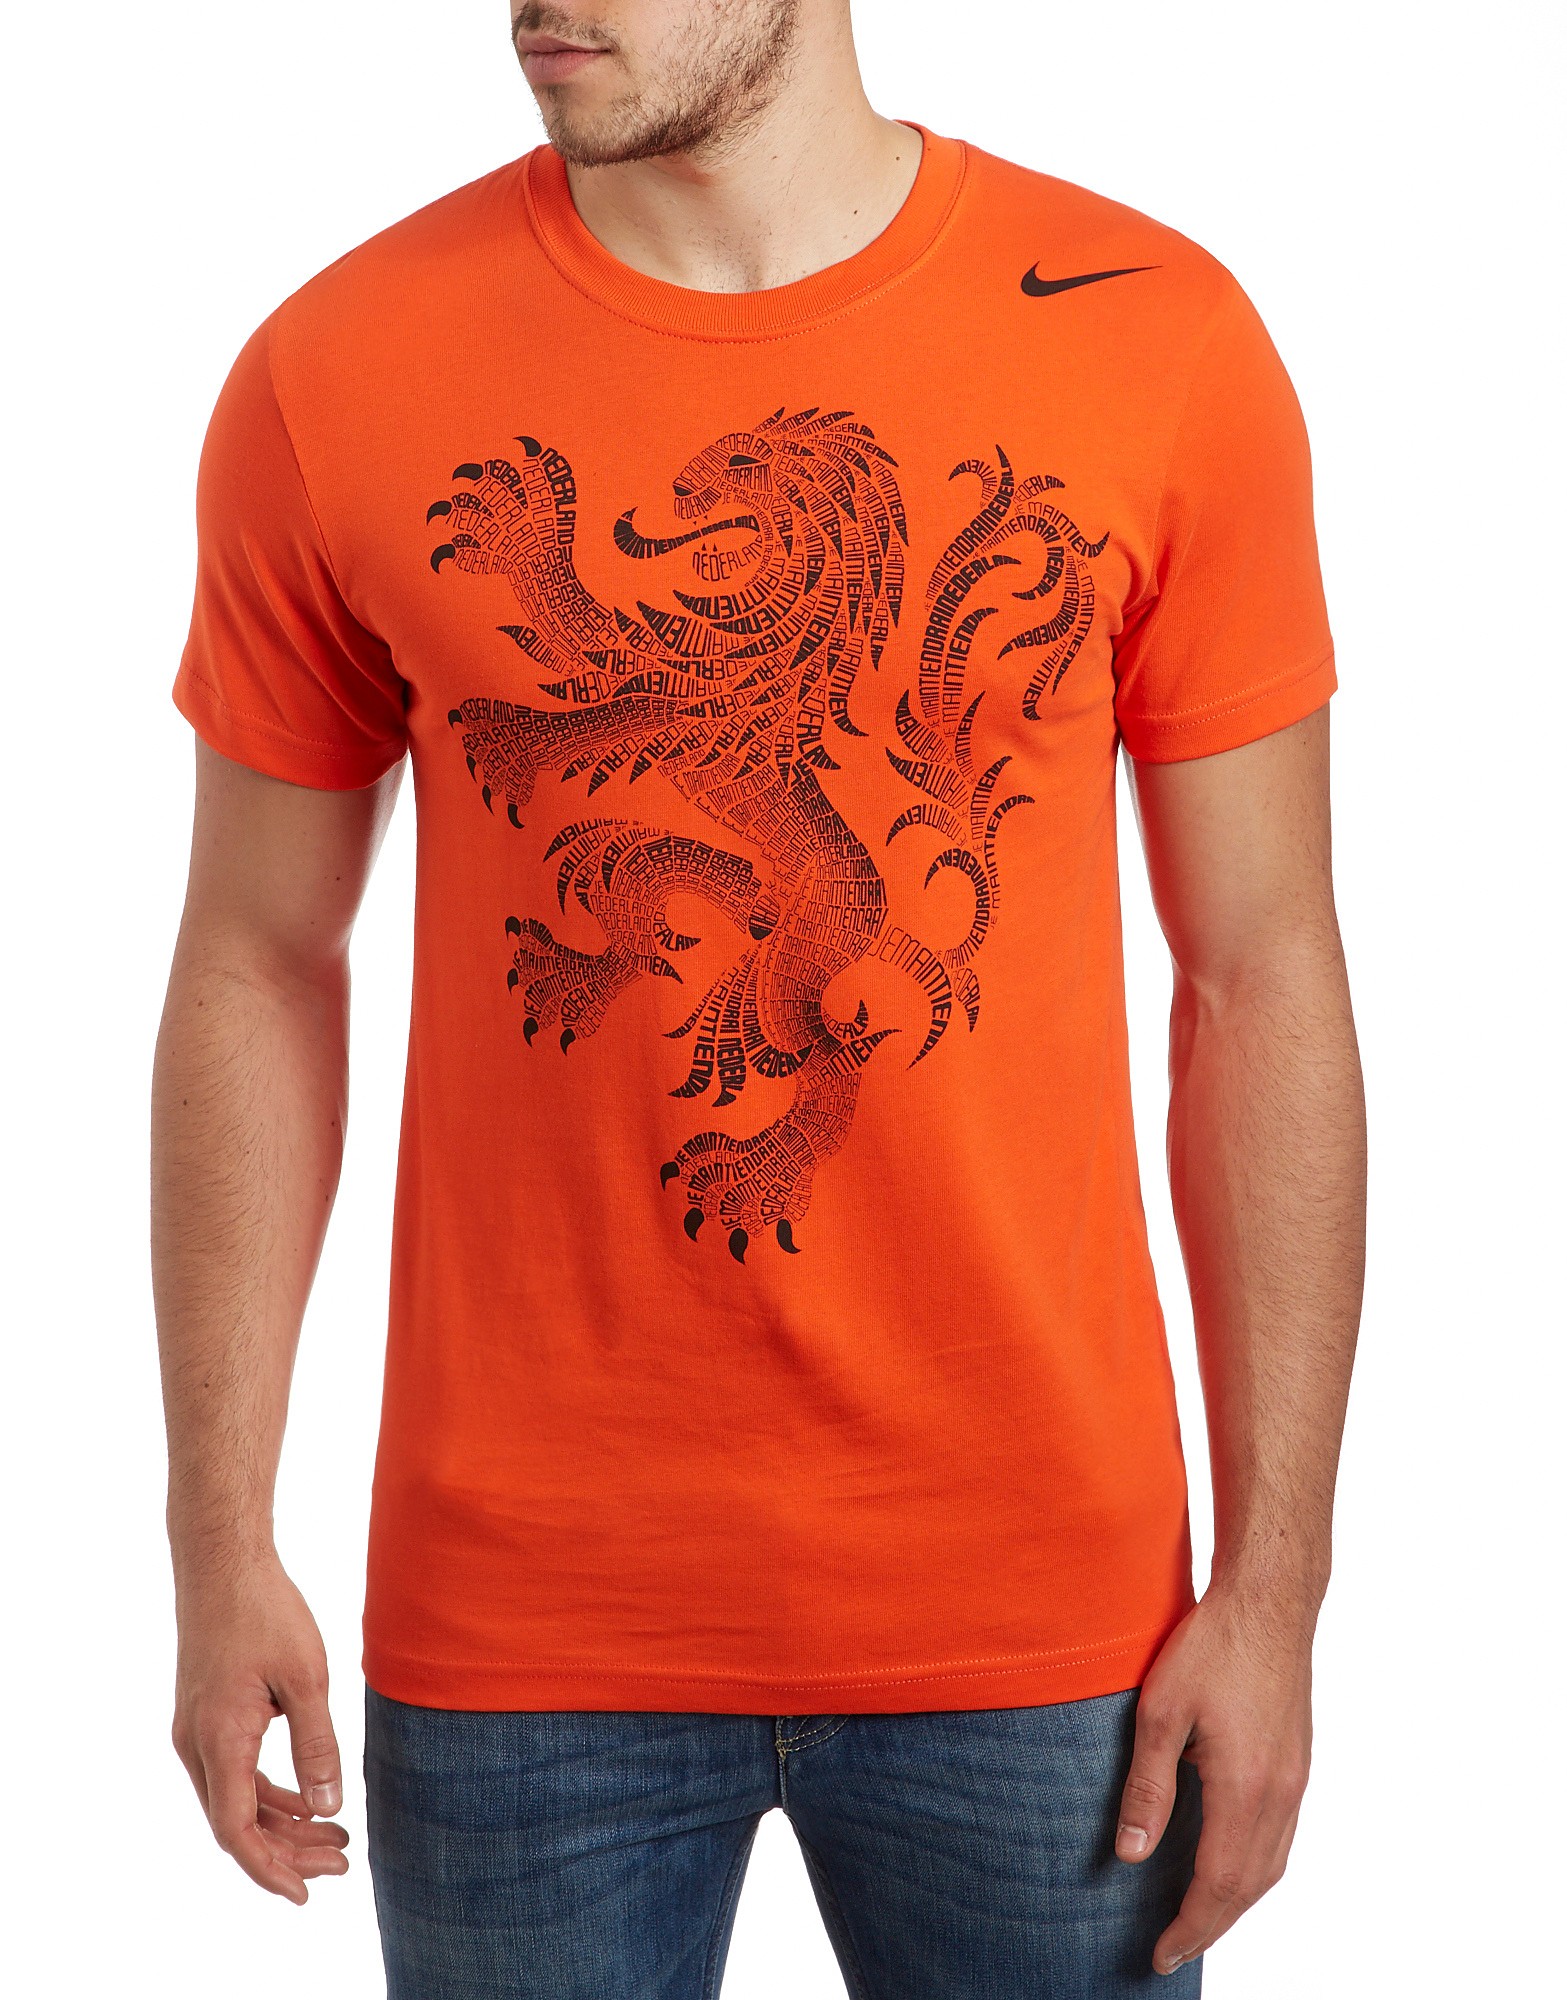 Holland Graphic T-Shirt